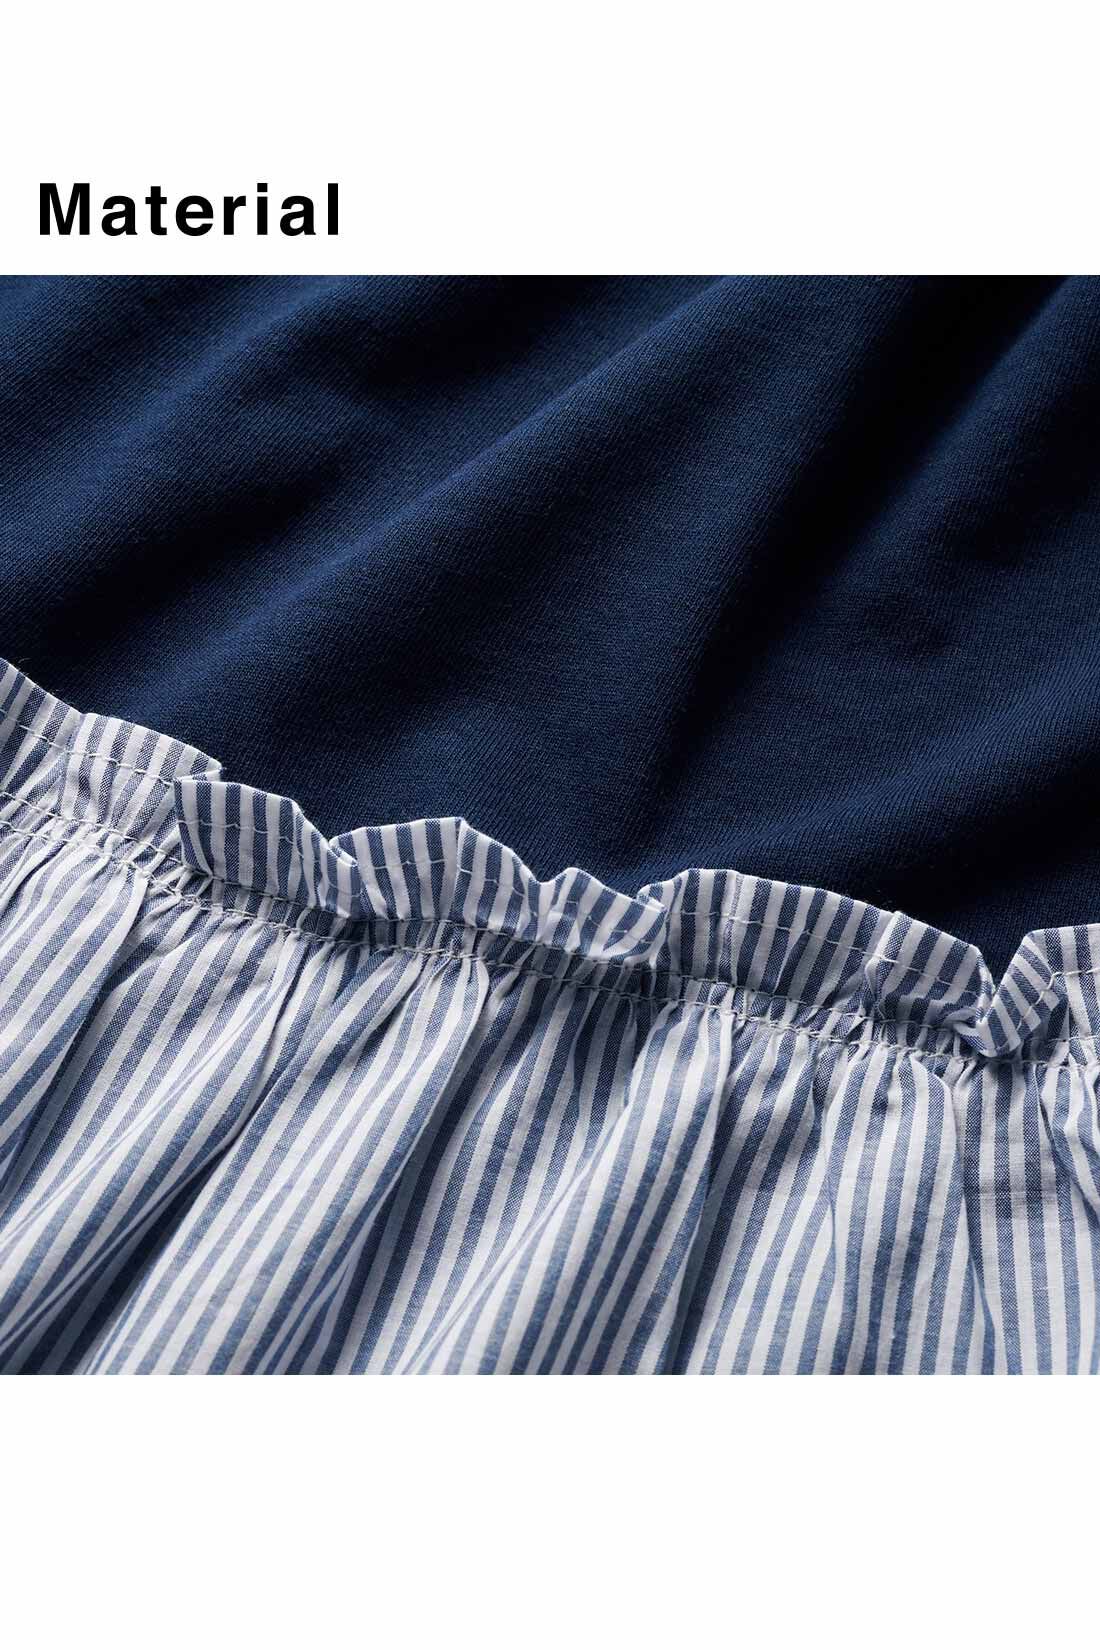 IEDIT|IEDIT[イディット]　異素材ストライプ遣いのボリューム袖トップス〈ネイビー〉|カットソー×布はくの組み合わせでメリハリを。素材はともに綿100％。